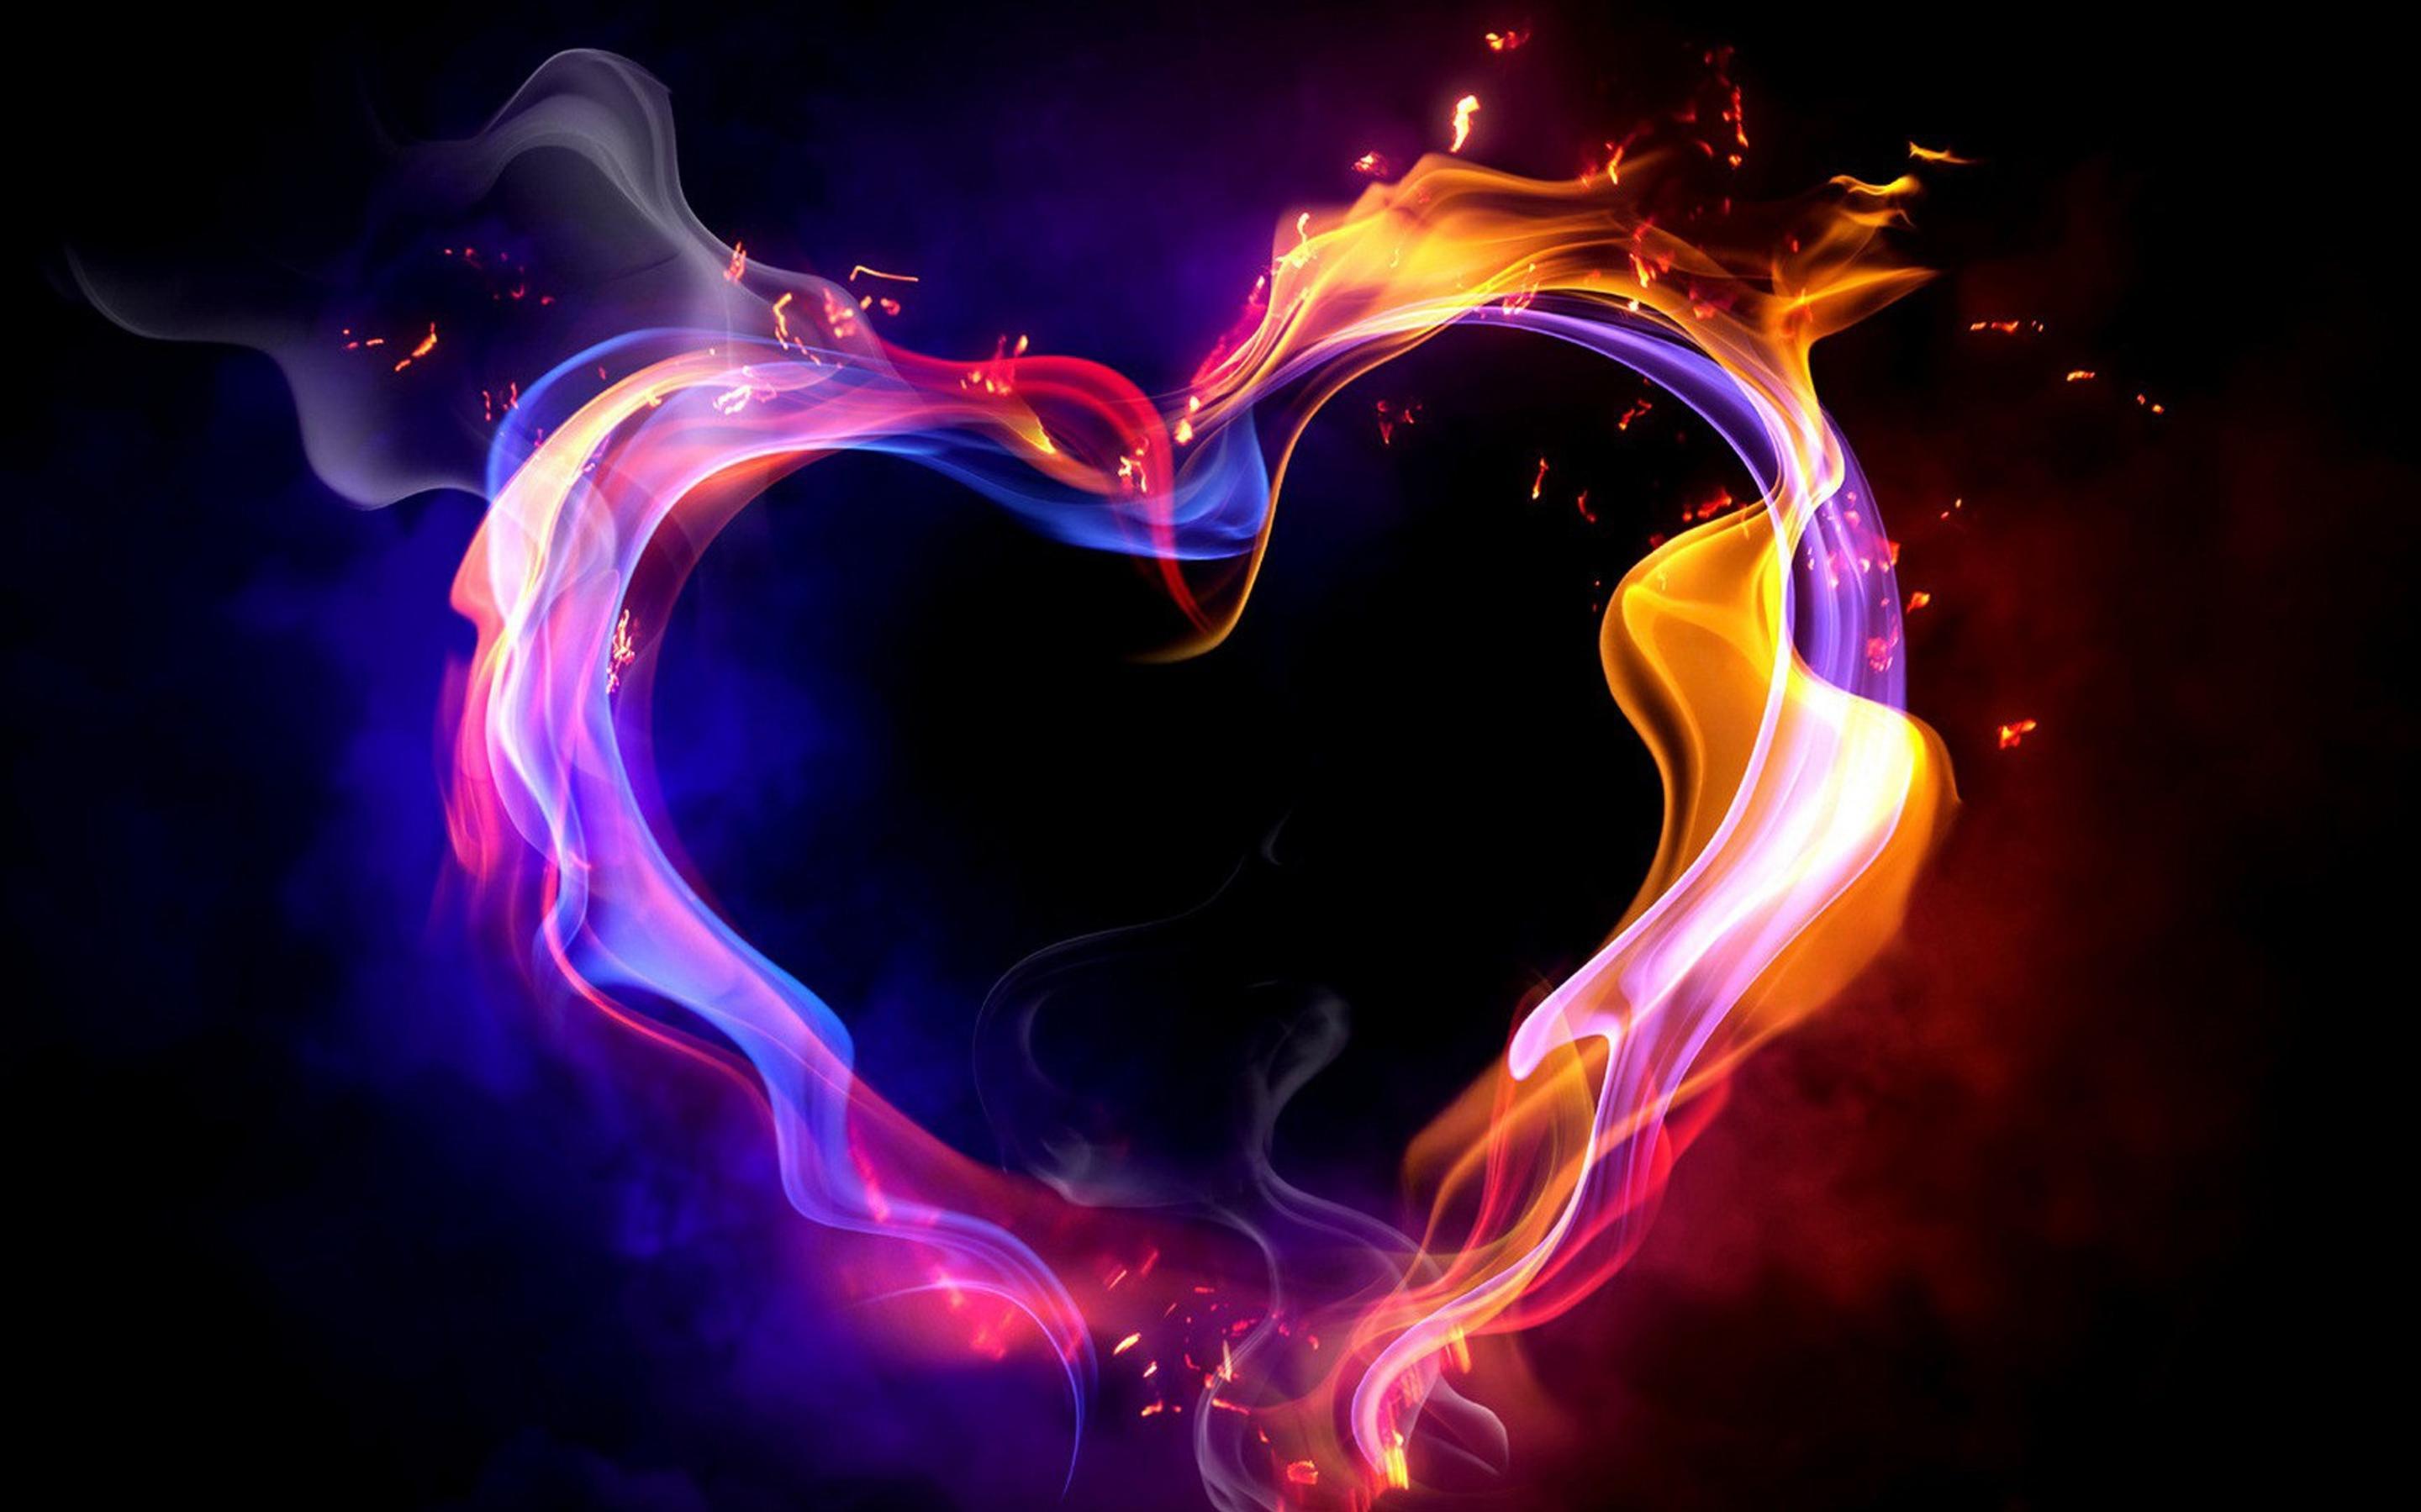 Heart On Fire Beautiful HD Valentine S Day Wallpaper